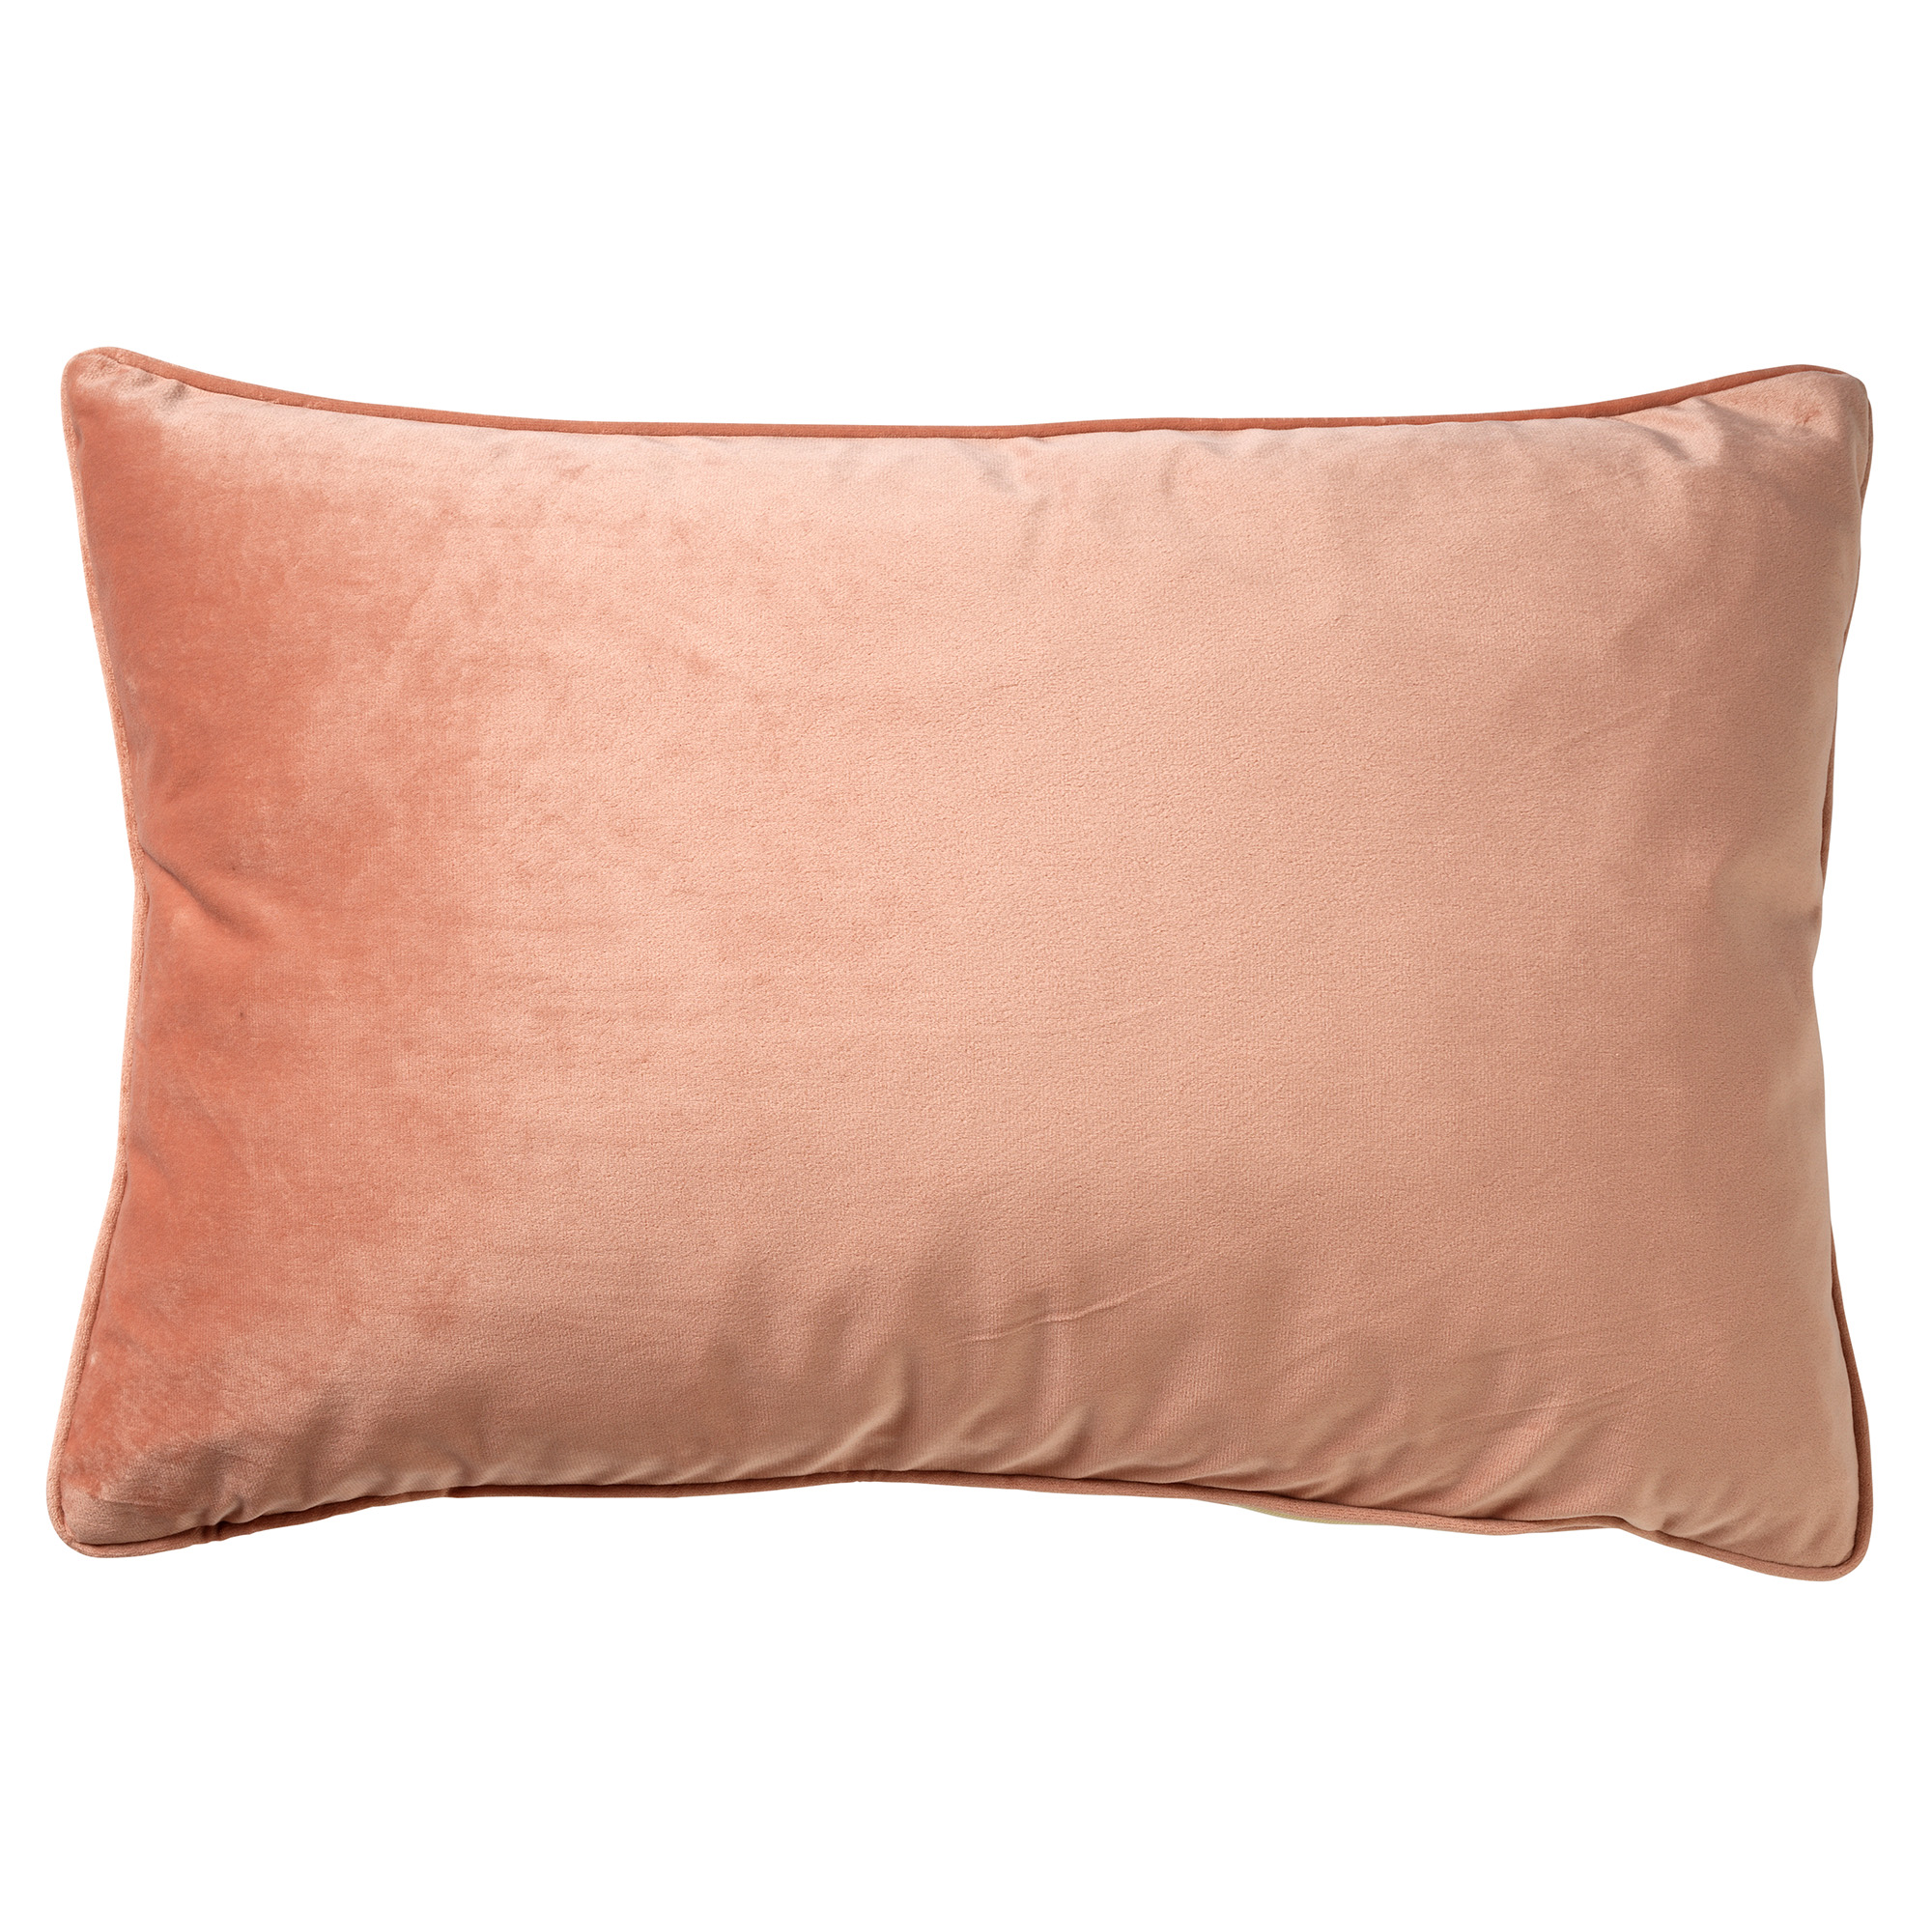 FINN - Kussenhoes velvet Muted Clay 40x60 cm - roze